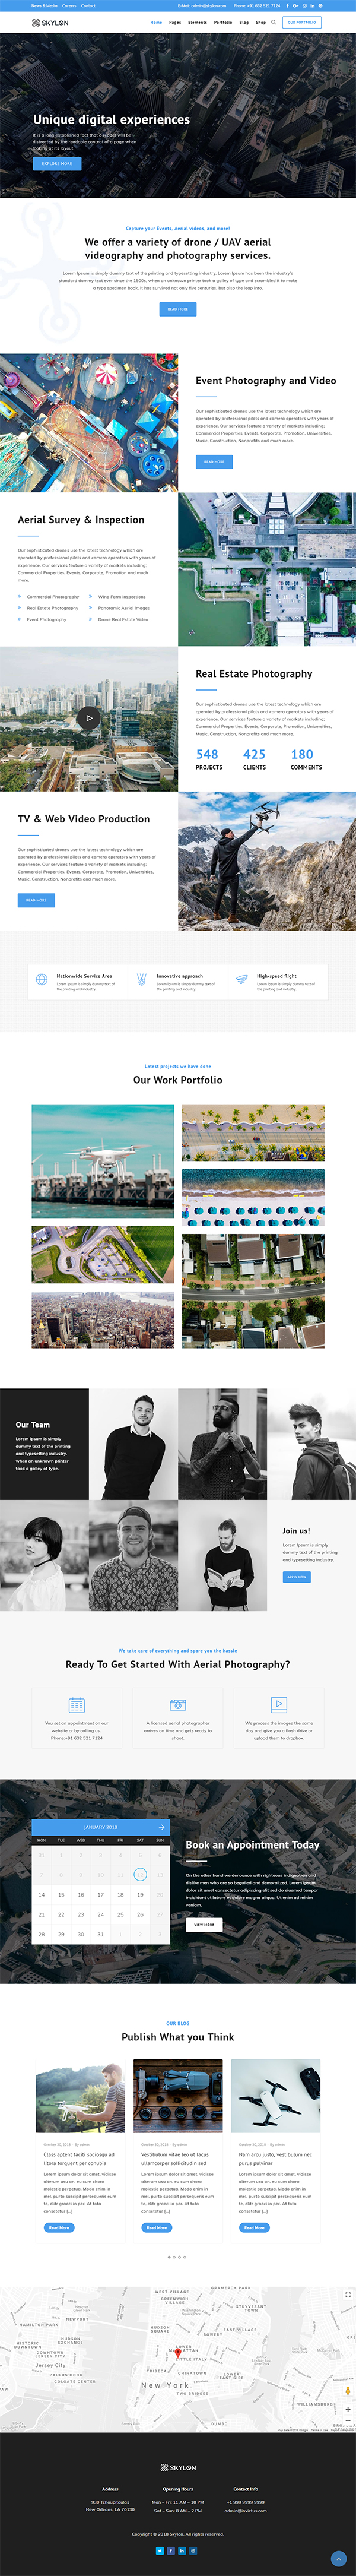 Skylon - Drone Aerial Photography & Videography WordPress Theme